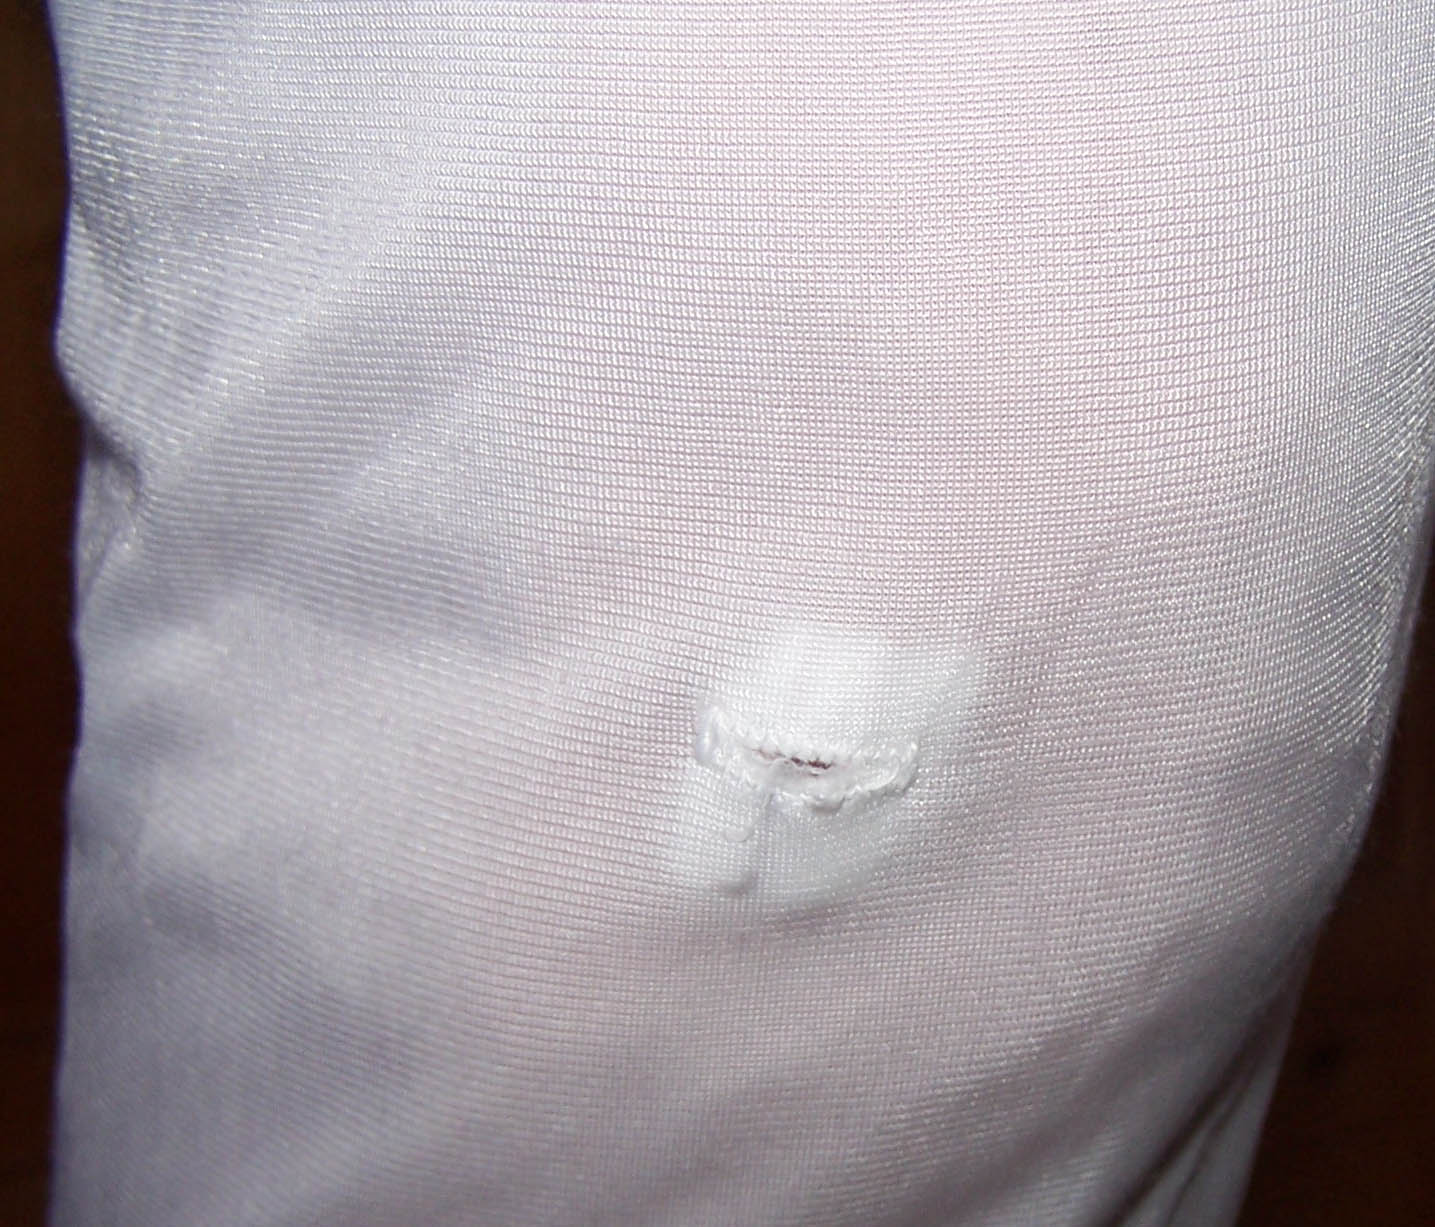 Mormon temple garment female knee marking.